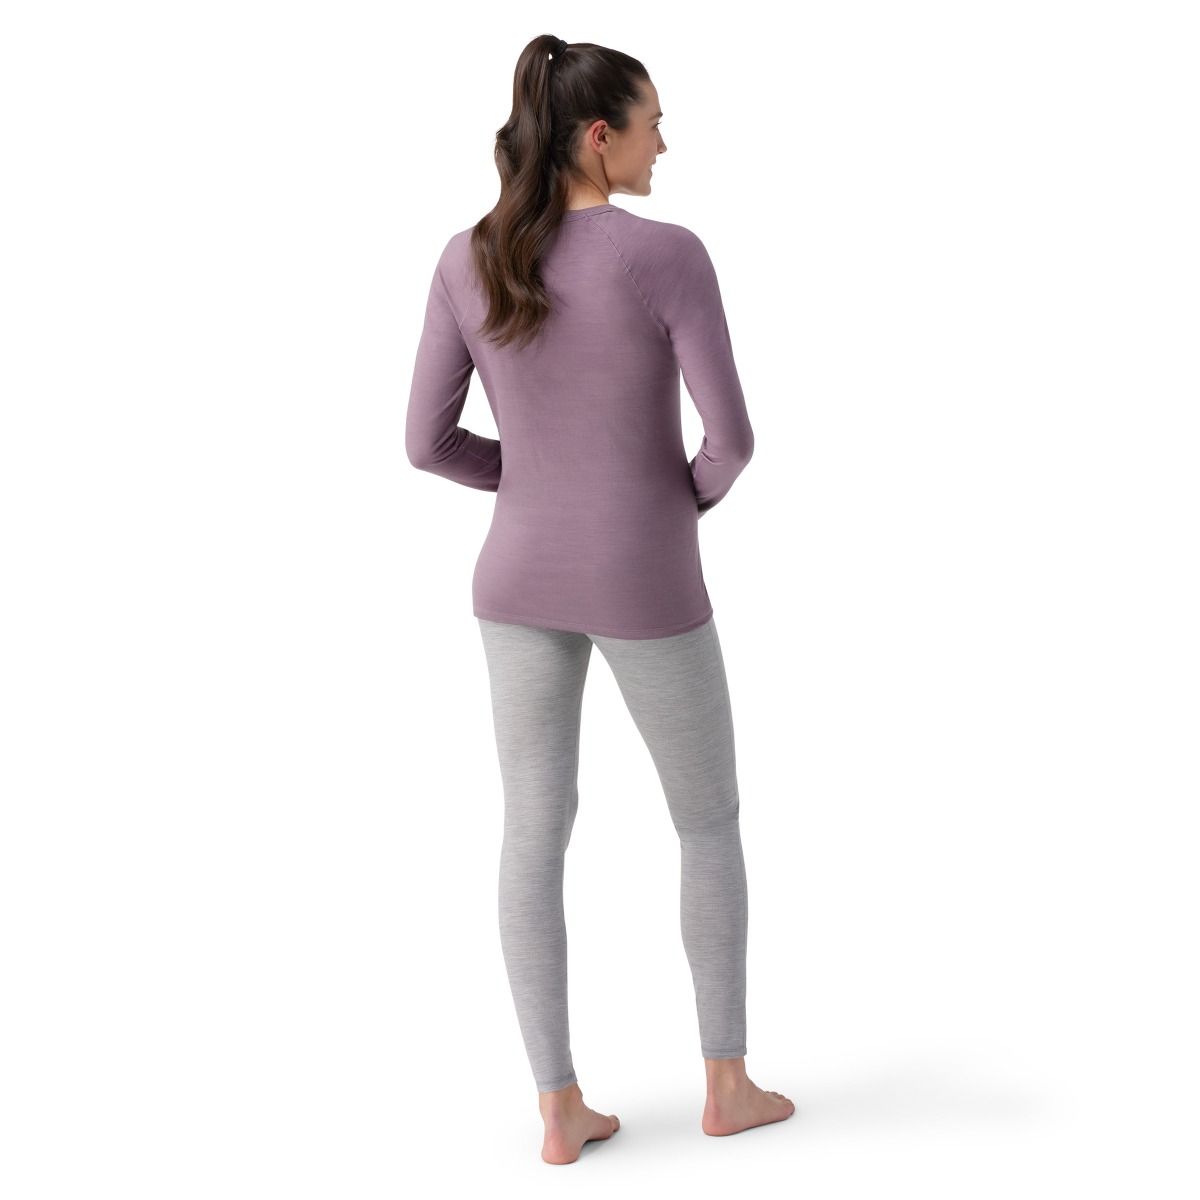 DSG Outerwear Sydney Long Sleeve Shirt - Realtree Aspect Ocean Spray/orchid, Women's, Size: Large, Purple